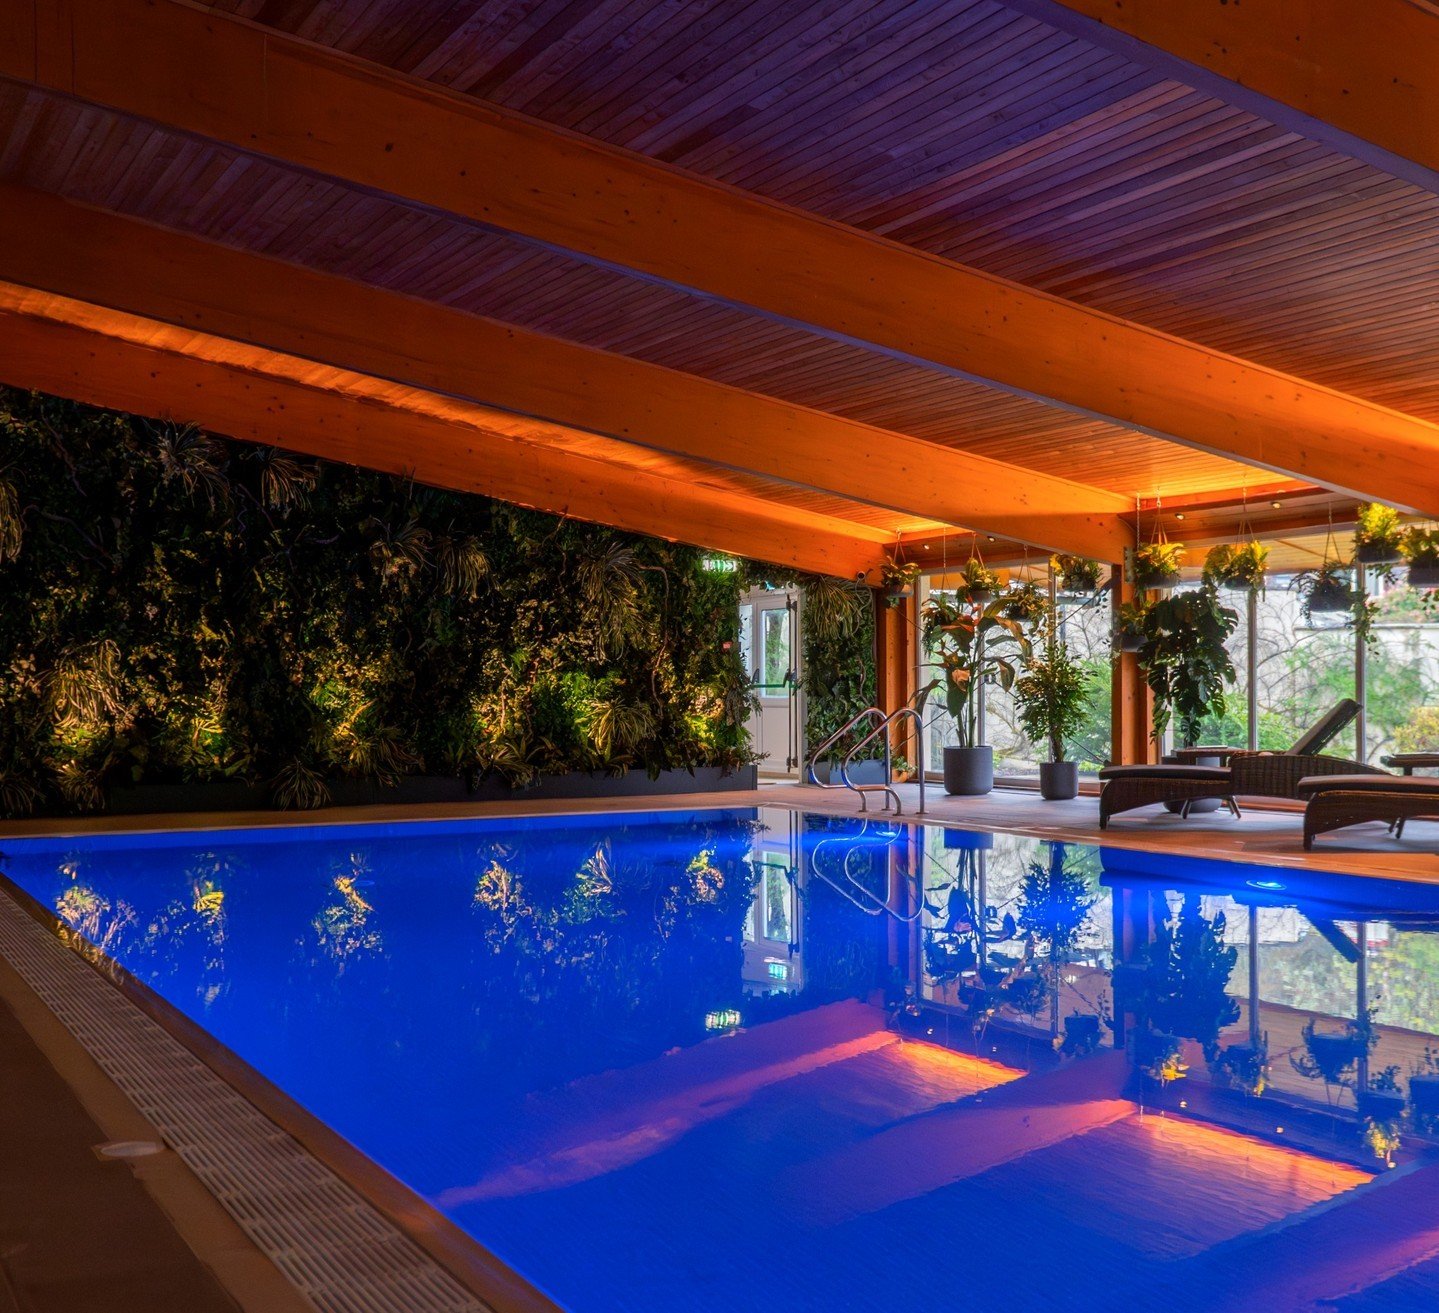 Feeling adventurous? Let's dive right in!

#eriska #luxuryhotel #vacation #spa #swimmingpool